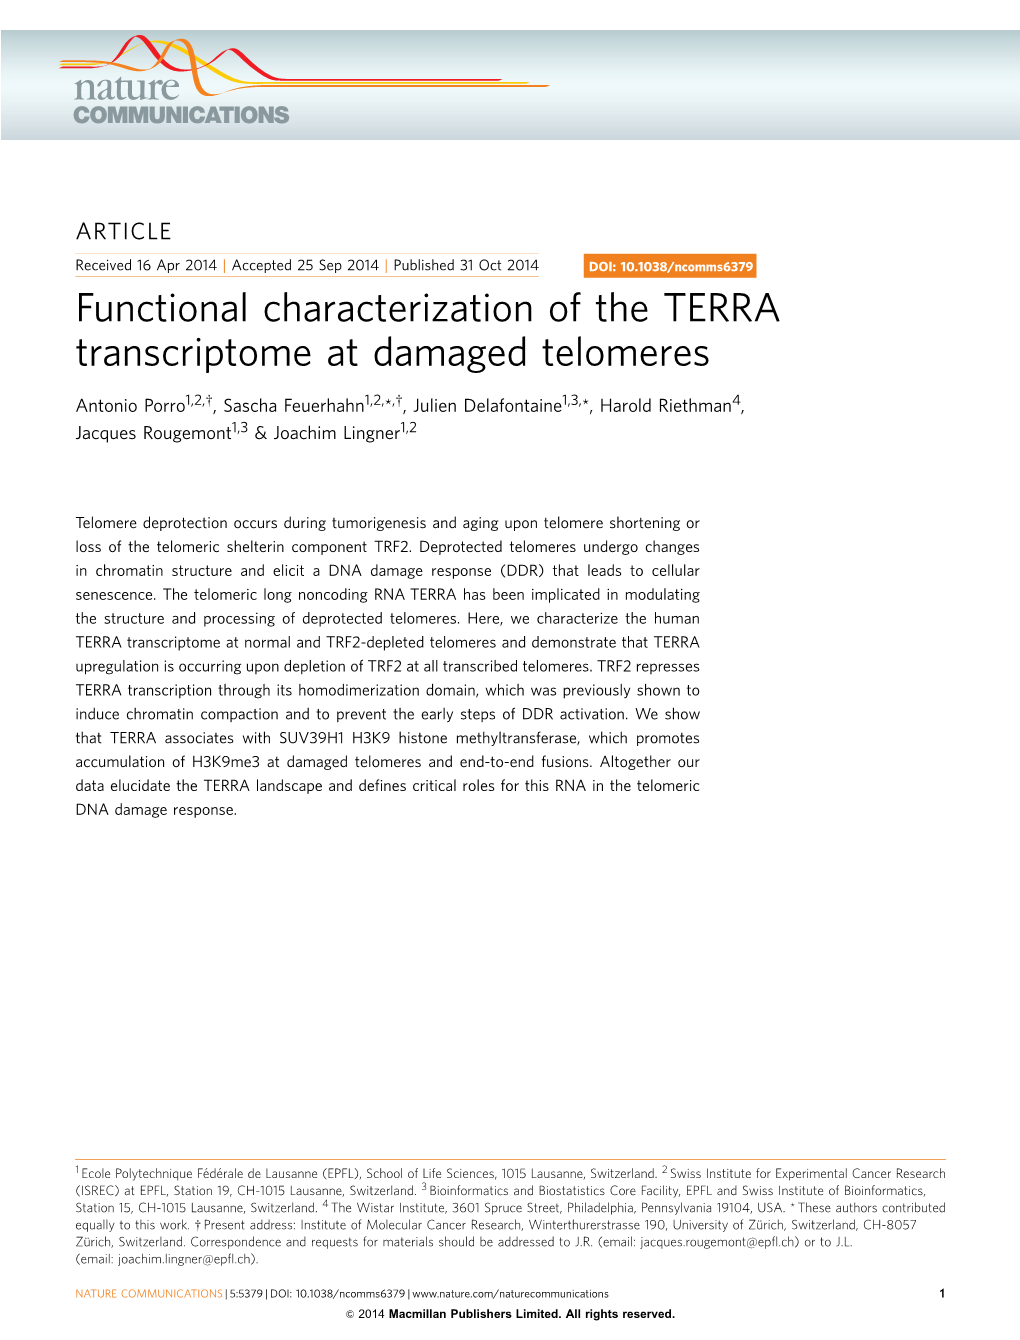 Functional Characterization of the TERRA Transcriptome at Damaged Telomeres